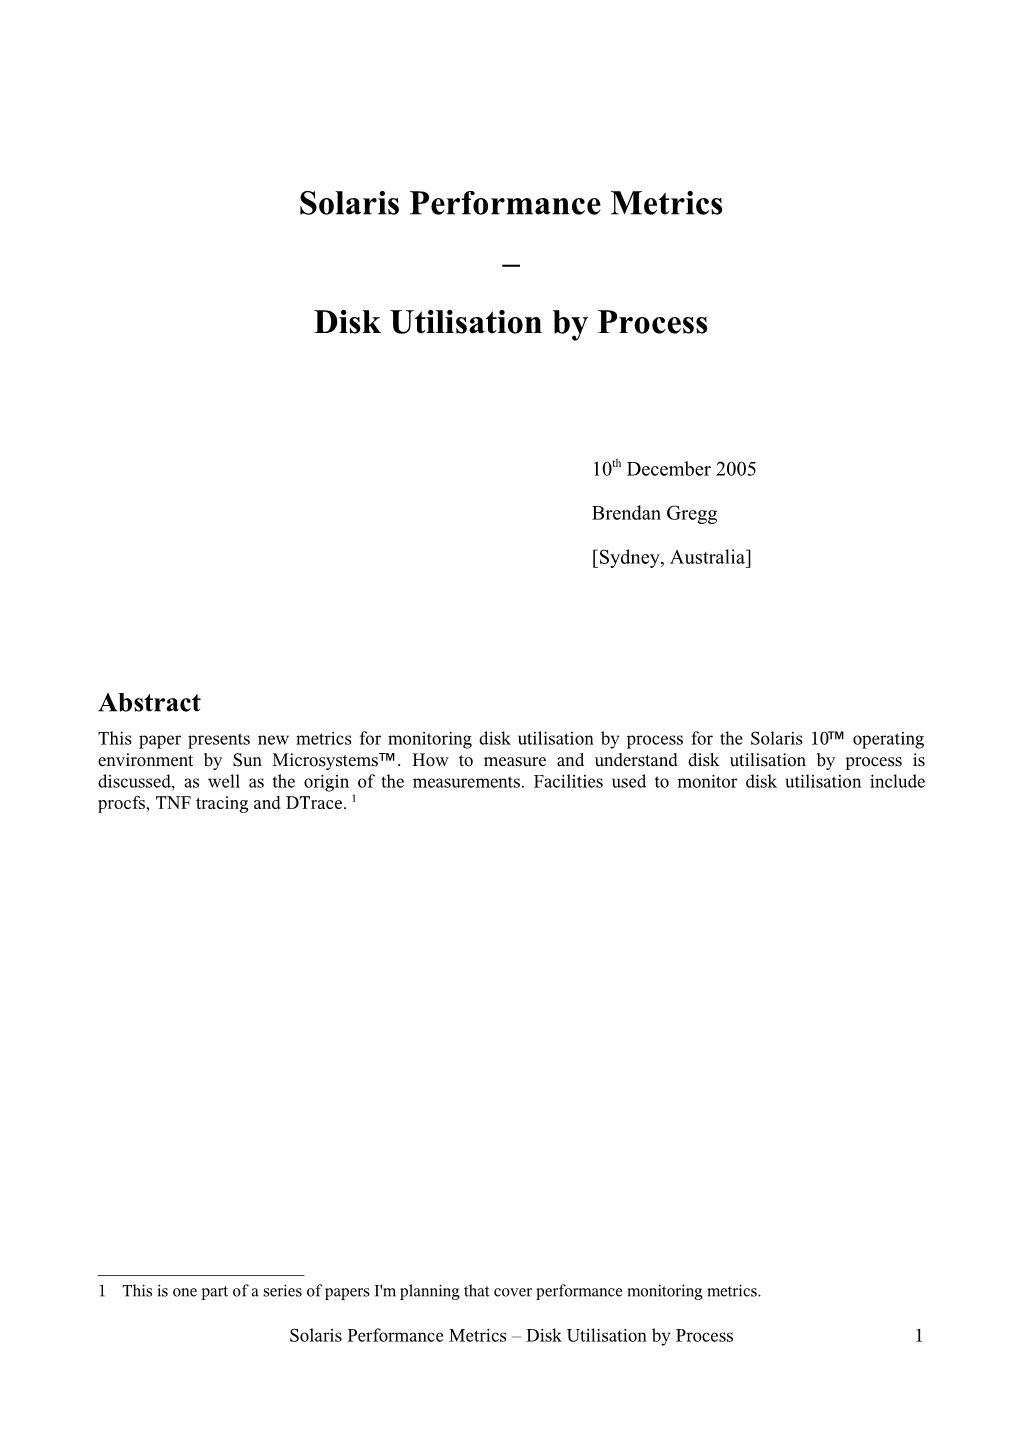 Disk Utilisation by Process